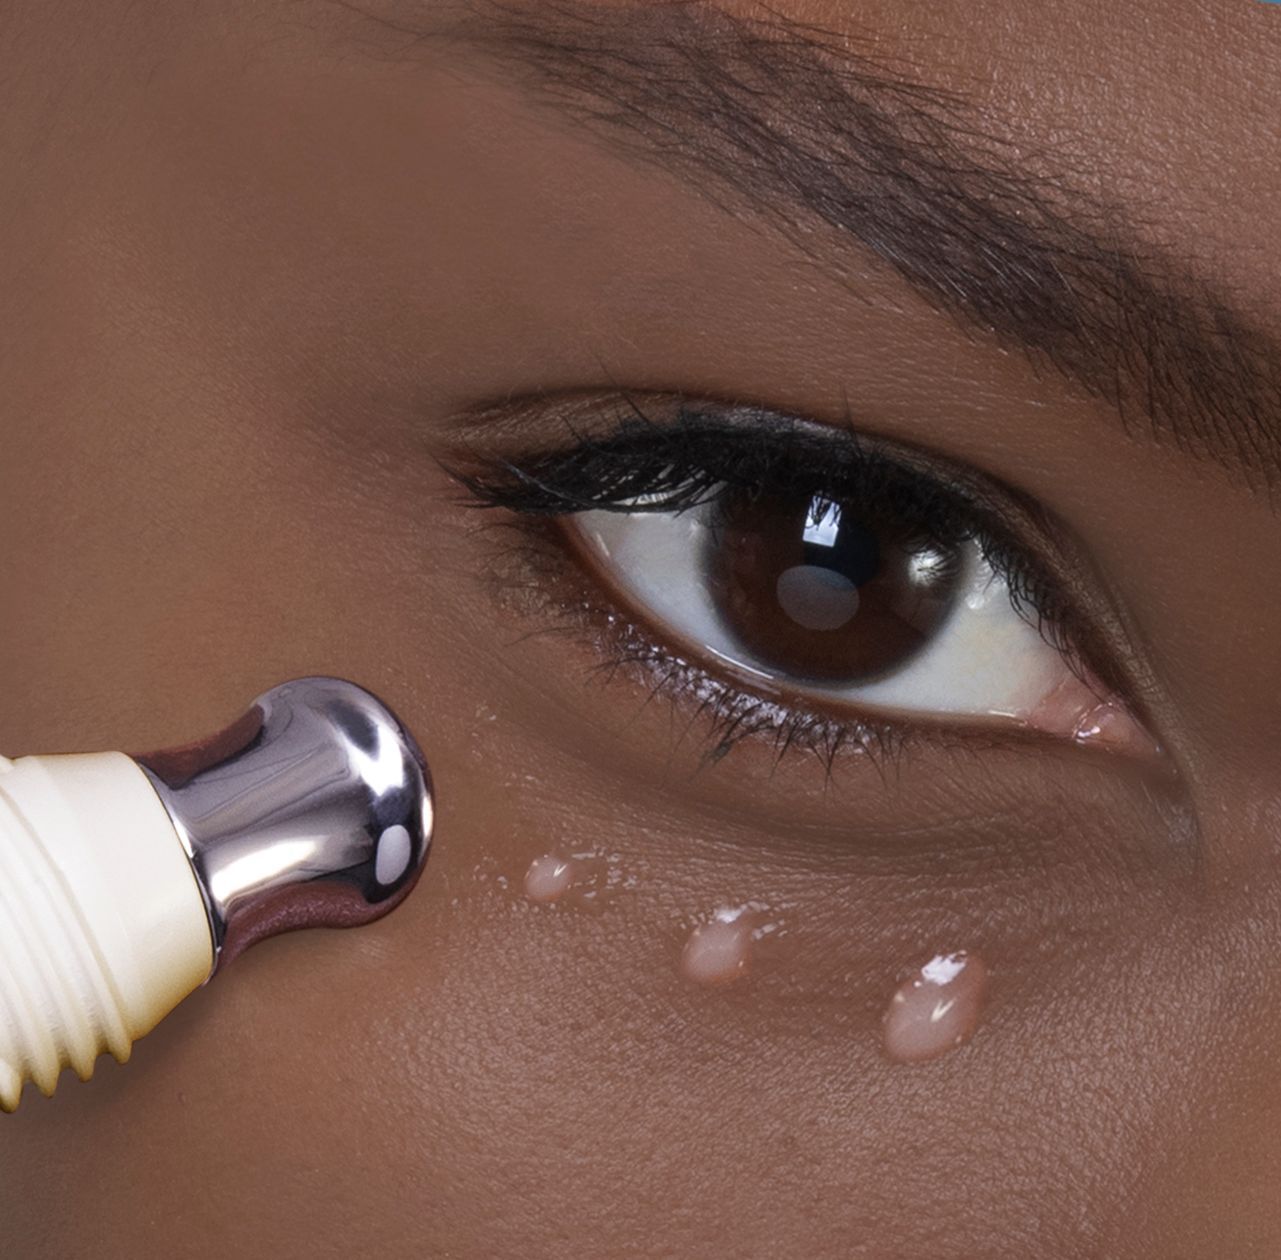 A woman is applying eye cream to her eye